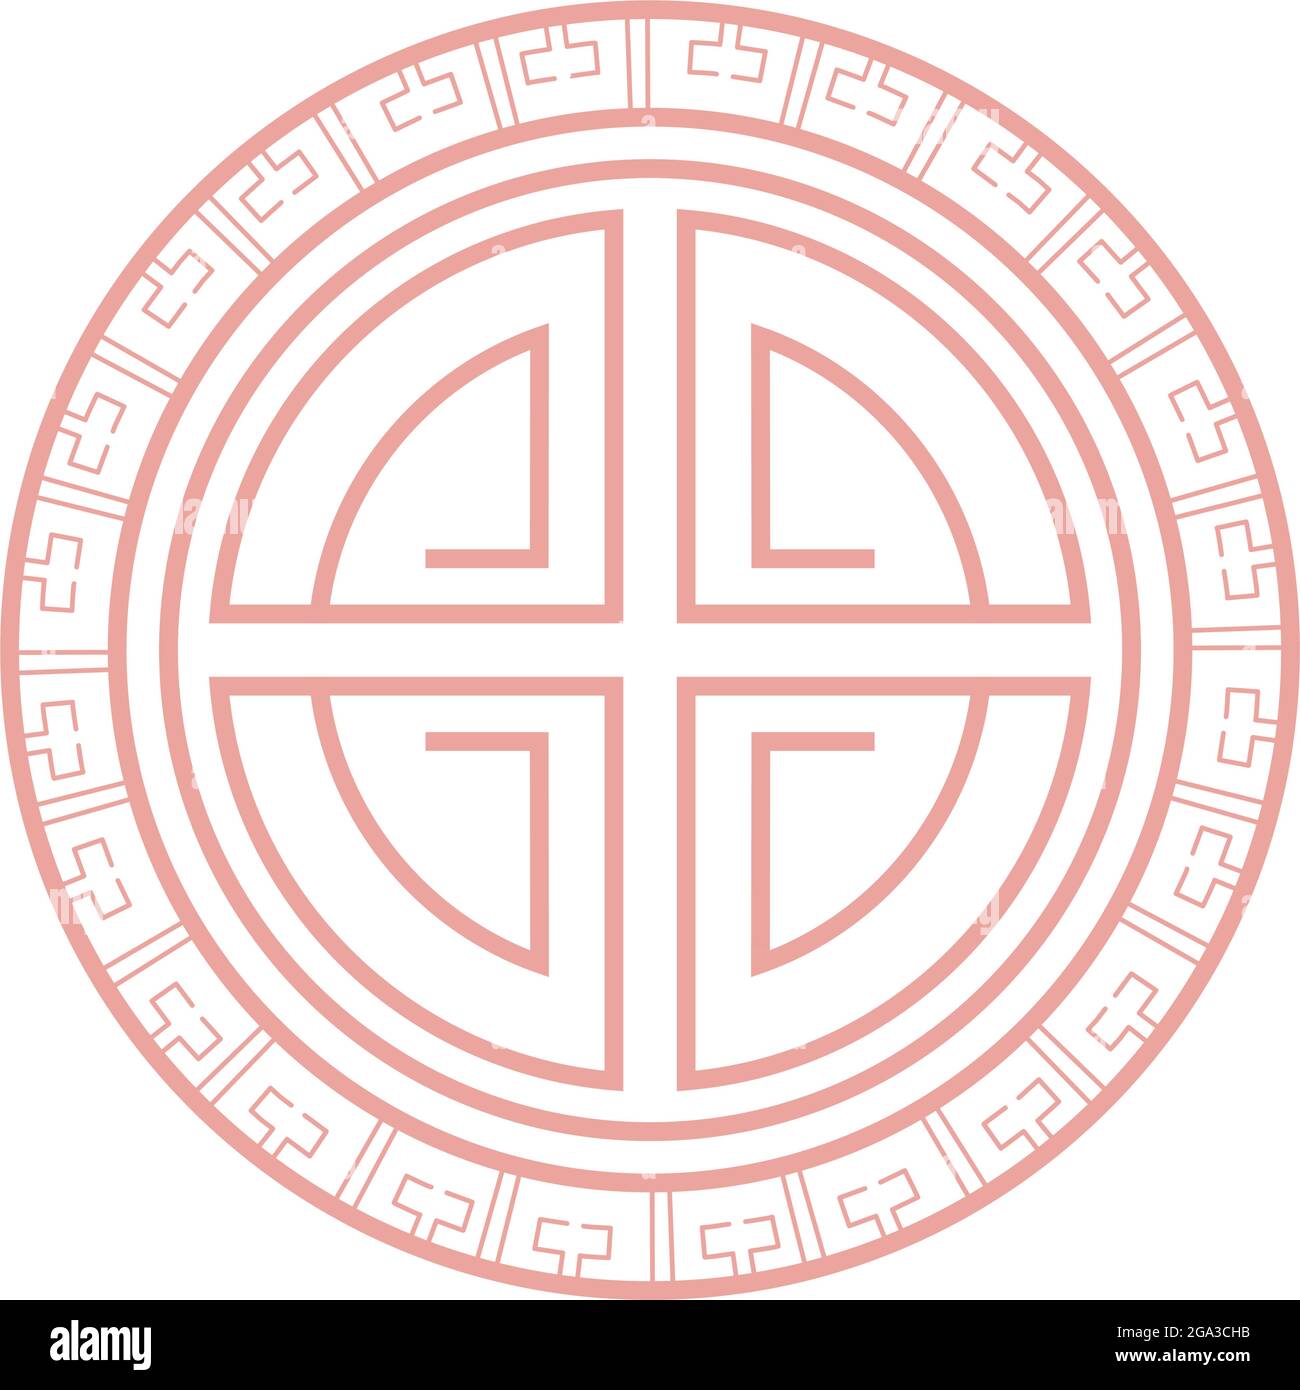 chinese moon festival circular emblem Stock Vector